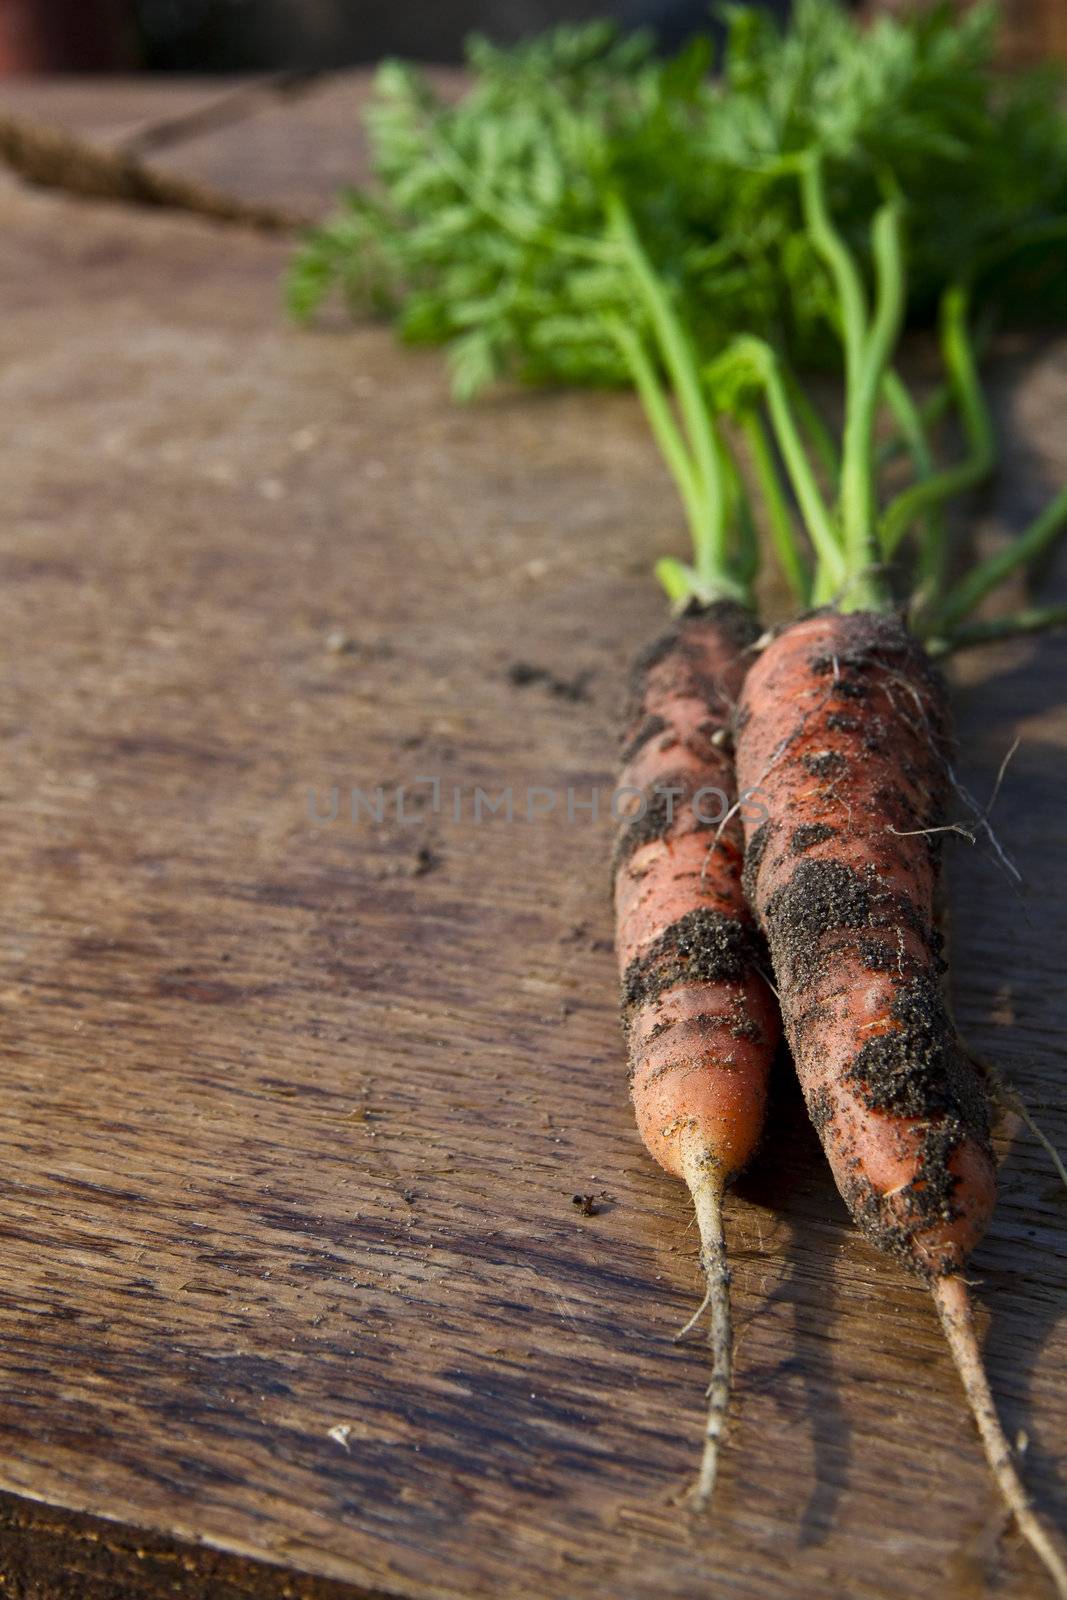 Fresh harvested carrots from the garden